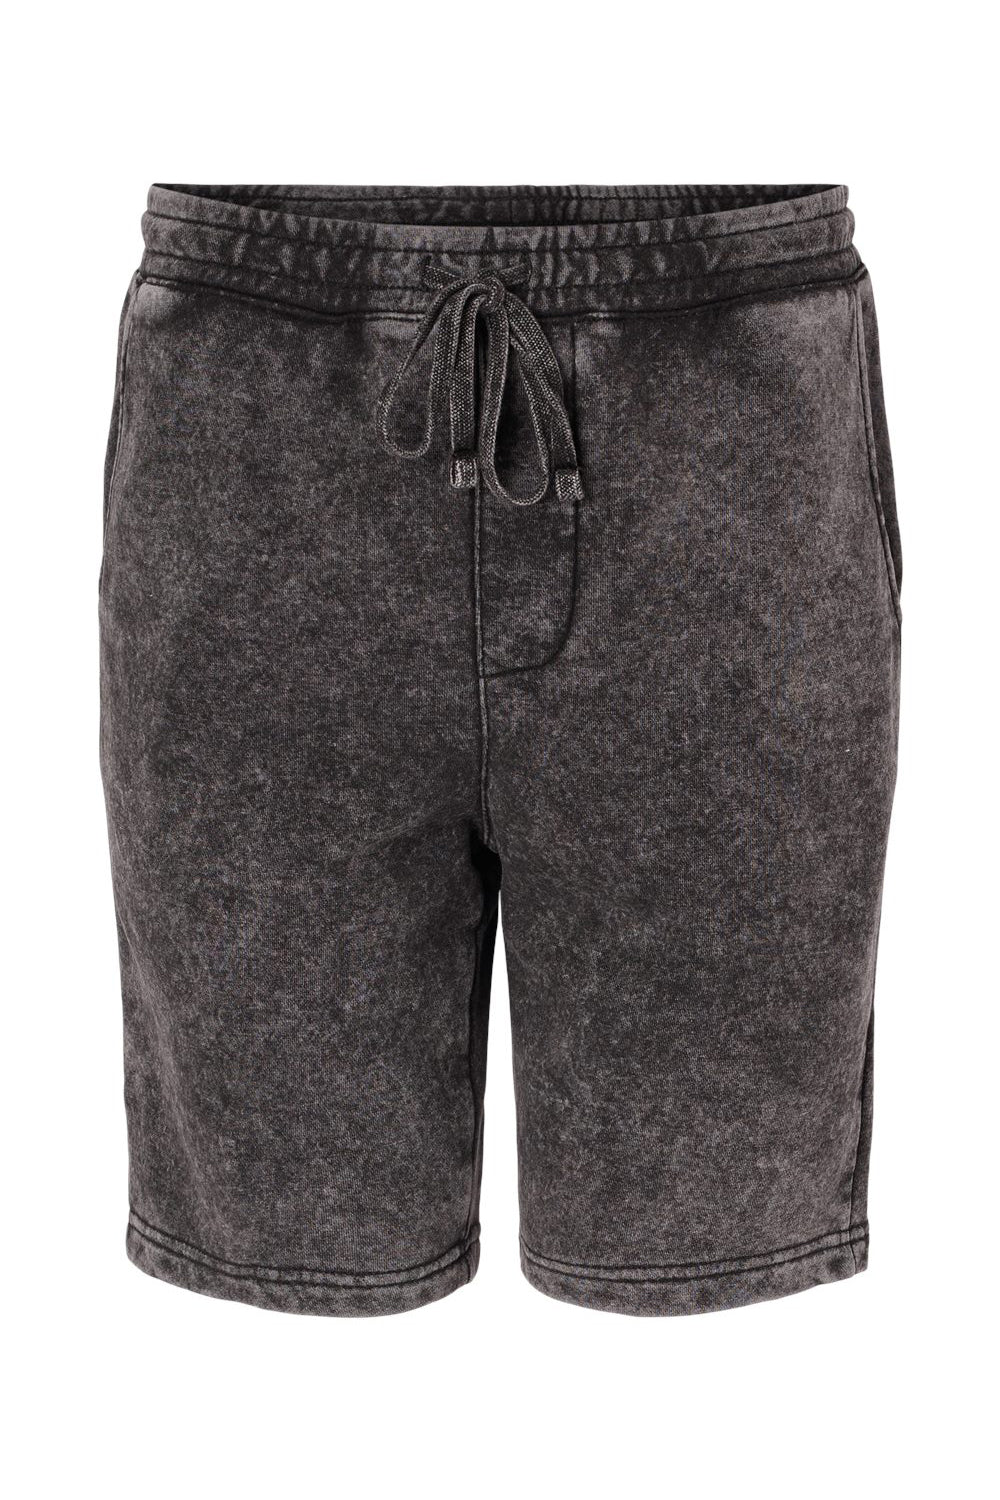 Independent Trading Co. PRM50STMW Mens Mineral Wash Fleece Shorts w/ Pockets Black Flat Front